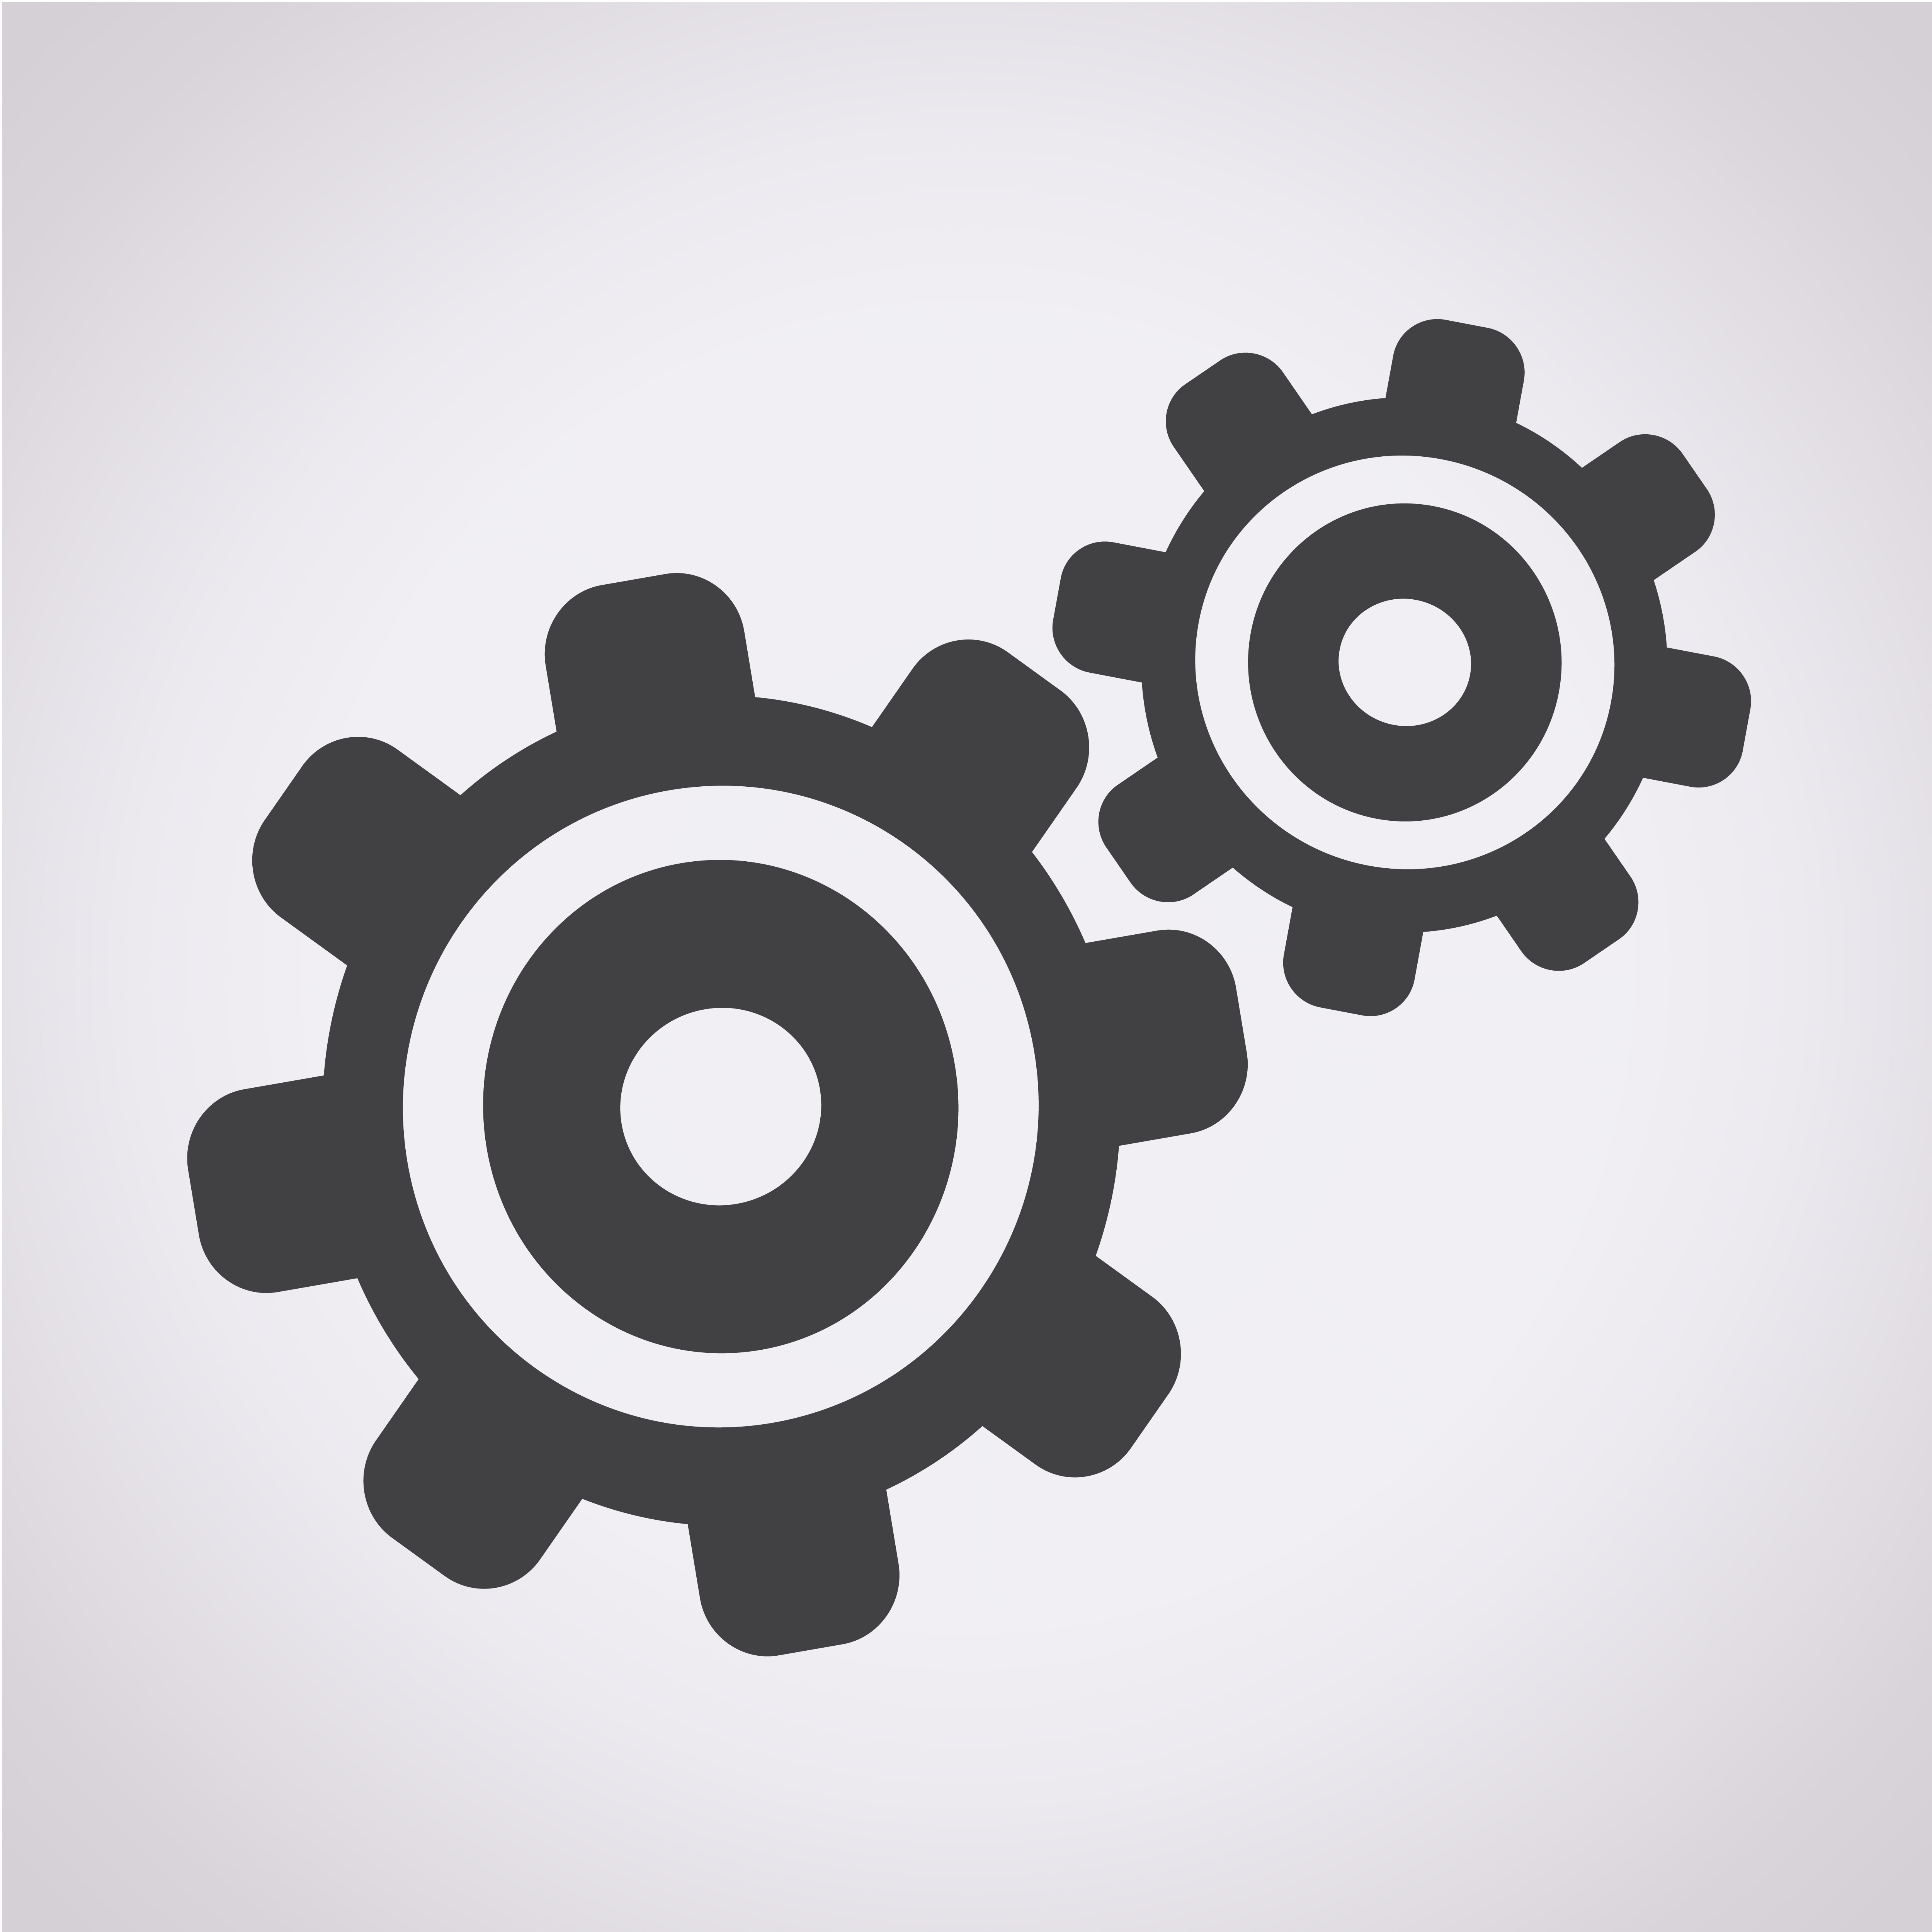  Gear  icon  symbol sign Download Free  Vectors Clipart 